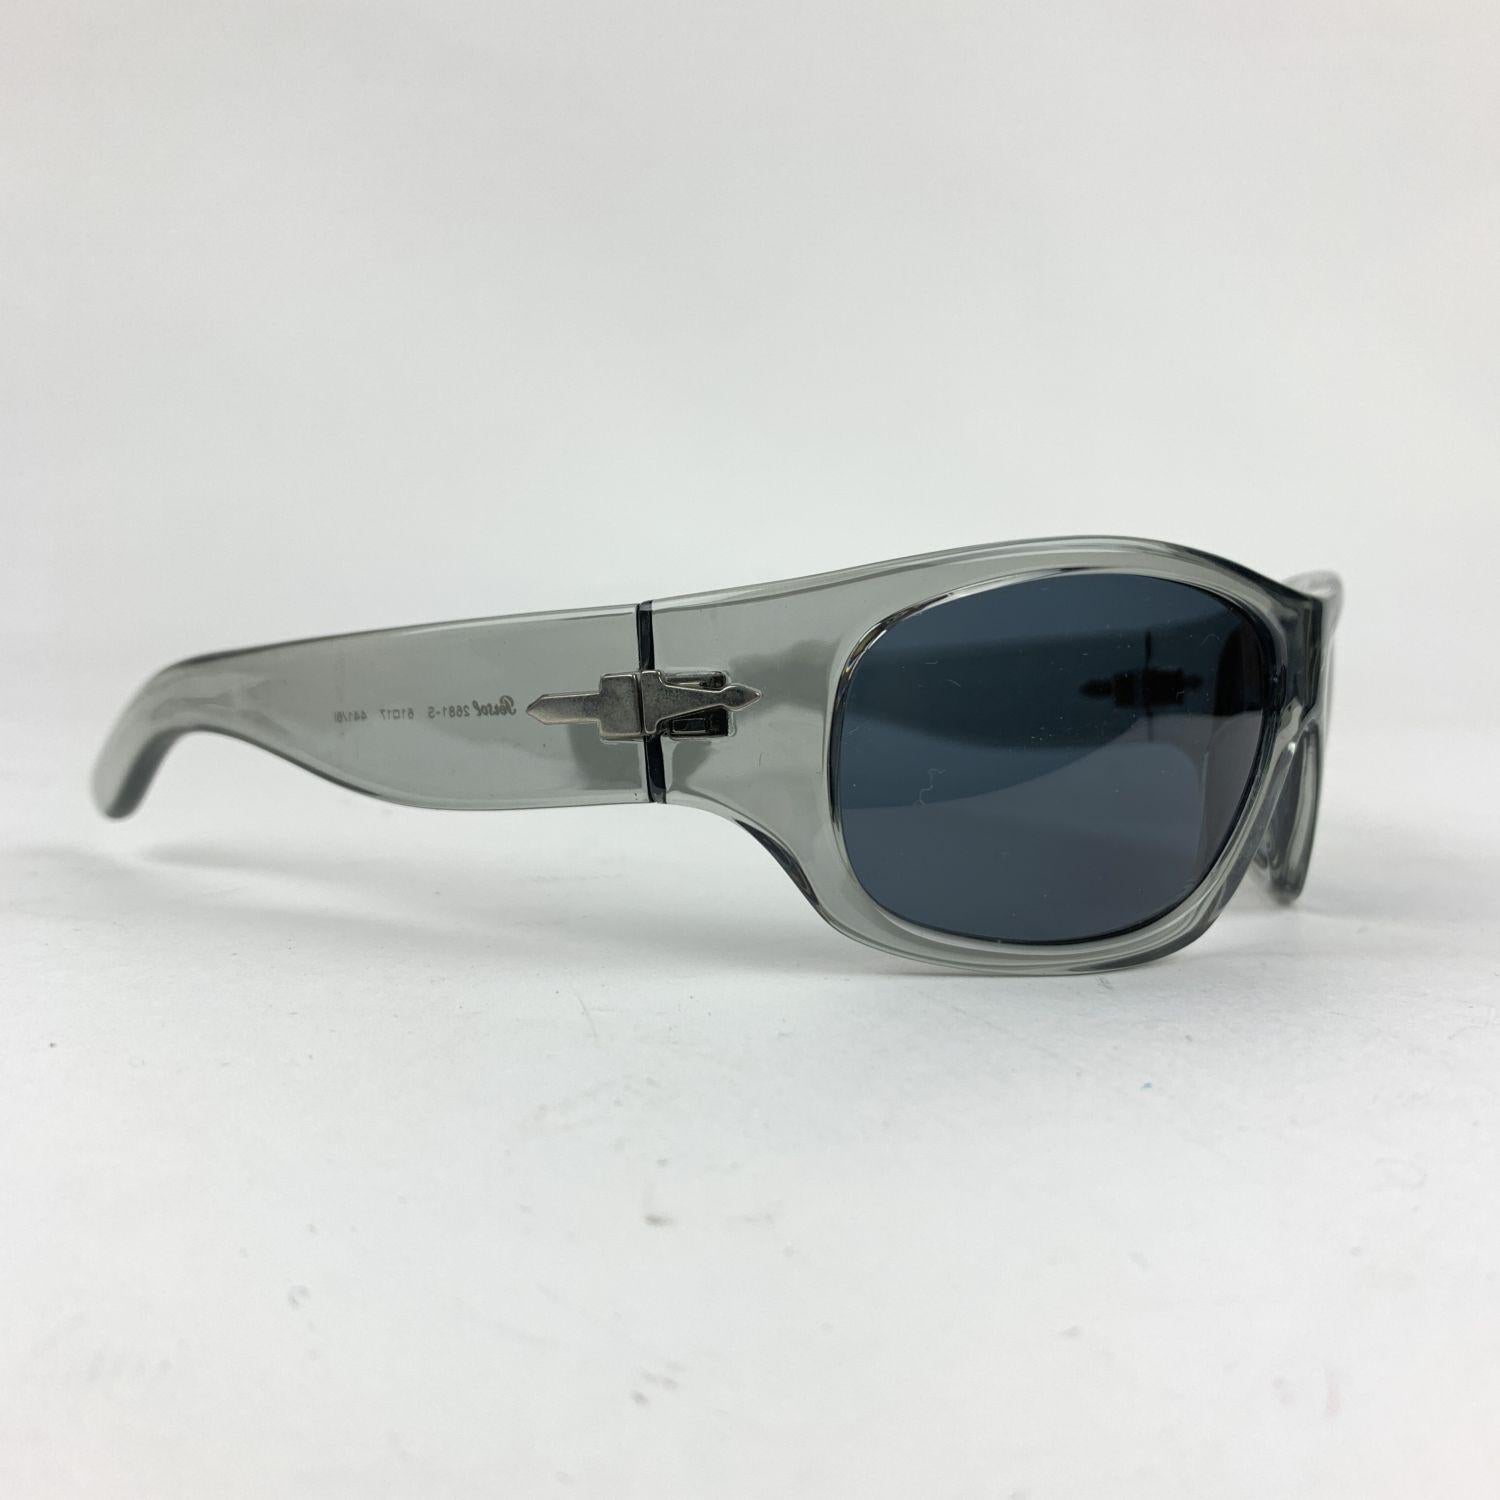 PERSOL Vintage Sunglasses- Model: 2681-S. Grey transparent acetate frame. Original blue lenses. 100% UV protection. Hand Made in Italy. Style & Refs: 2681-S - 61/17 - 441/61 - 120 Details MATERIAL: Acetate COLOR: Grey MODEL: 2681-S GENDER: Unisex